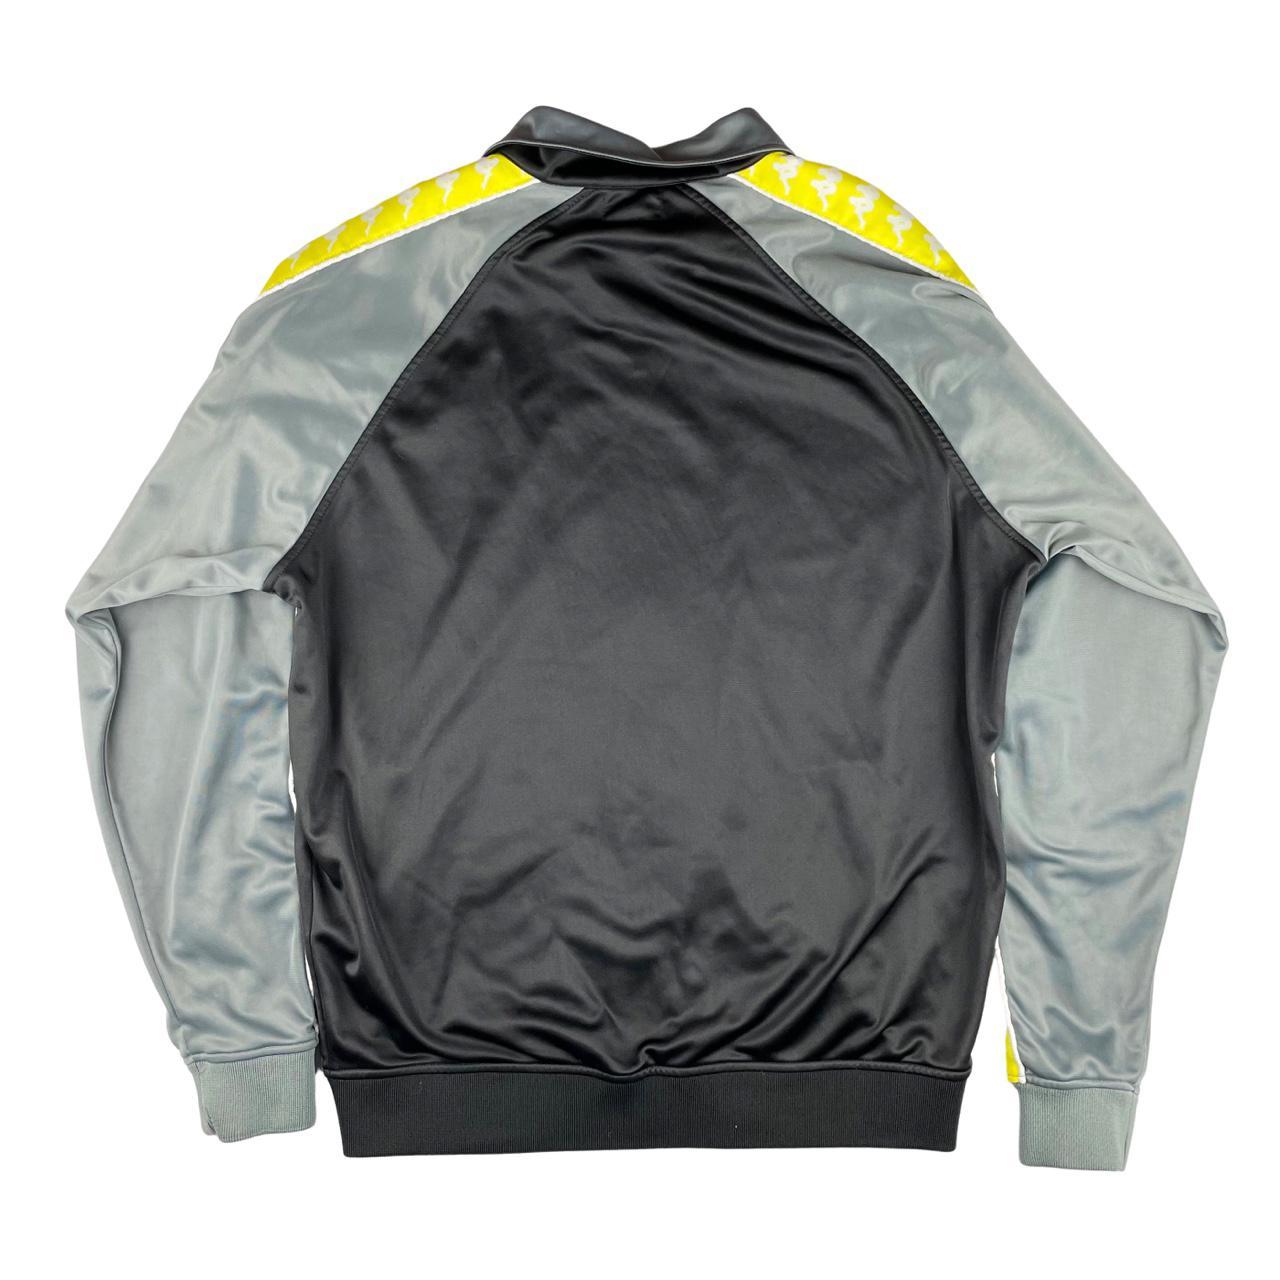 Product Image 2 - Kappa Zip-up Track Jacket

◾️ Size: